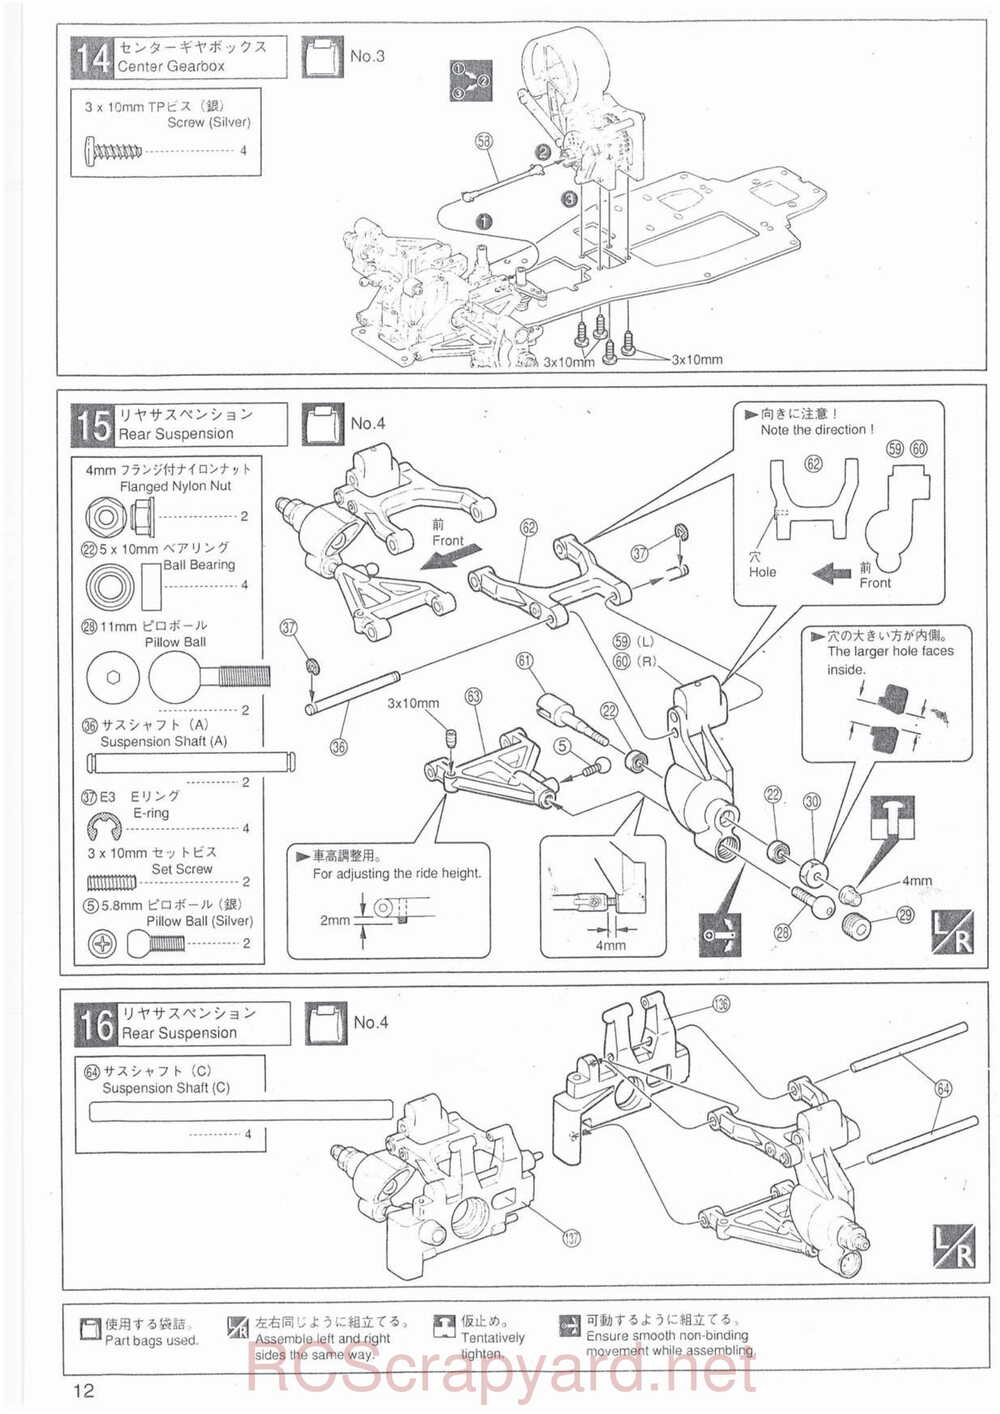 Kyosho - 31701 - Superten-Four FW-03 - Manual - Page 12